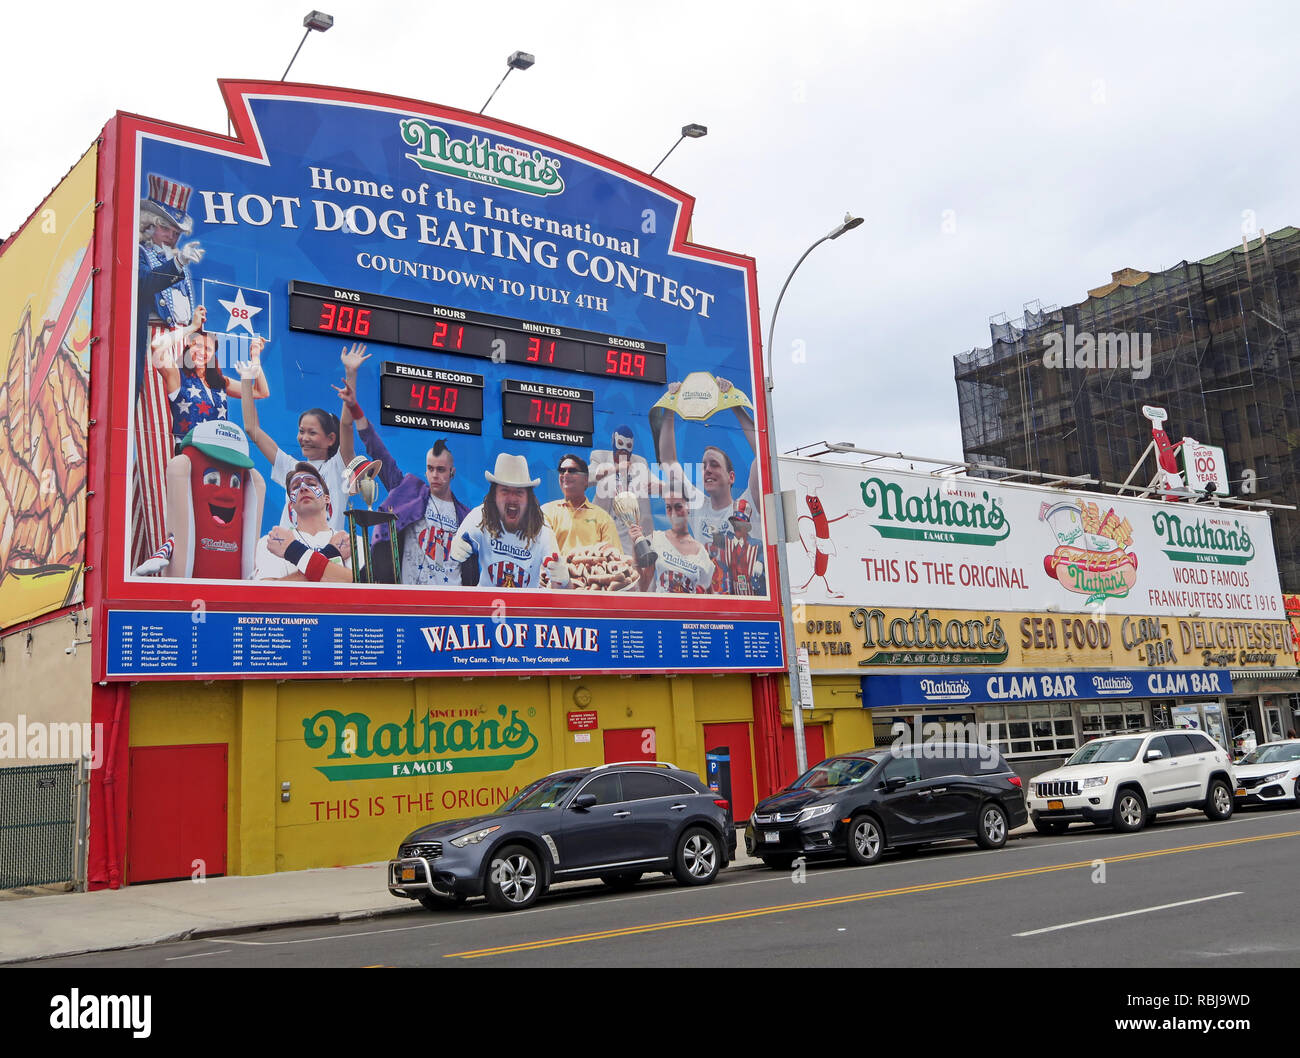 Nathans Handwerker célèbre hot-dog saucisses hot-dog eating contest, Coney Island, quartier de Brooklyn, New York, NY, USA Banque D'Images